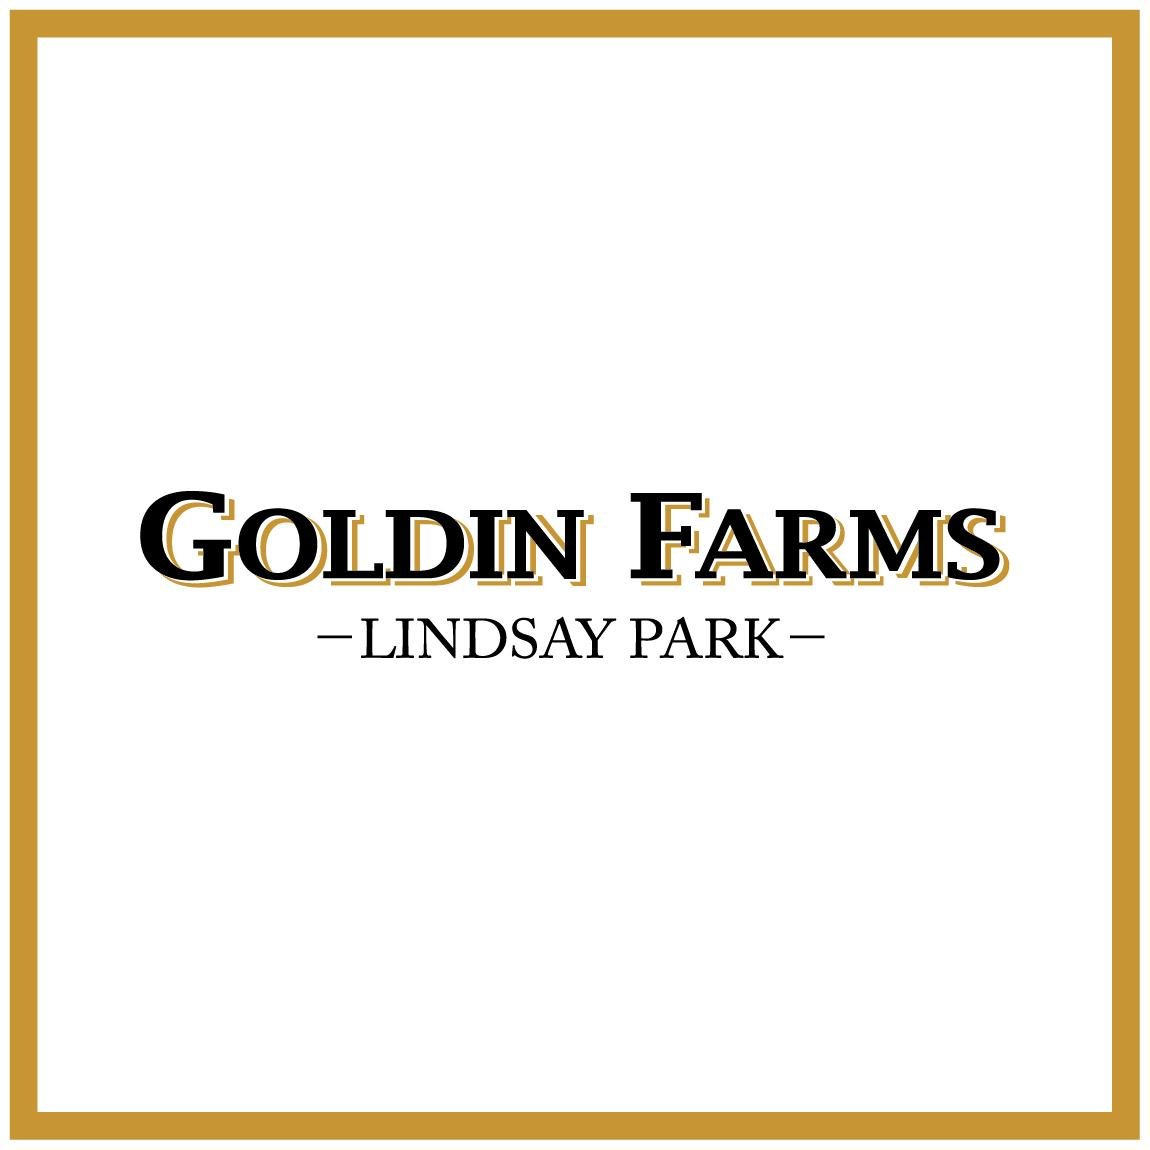 Goldin Farms